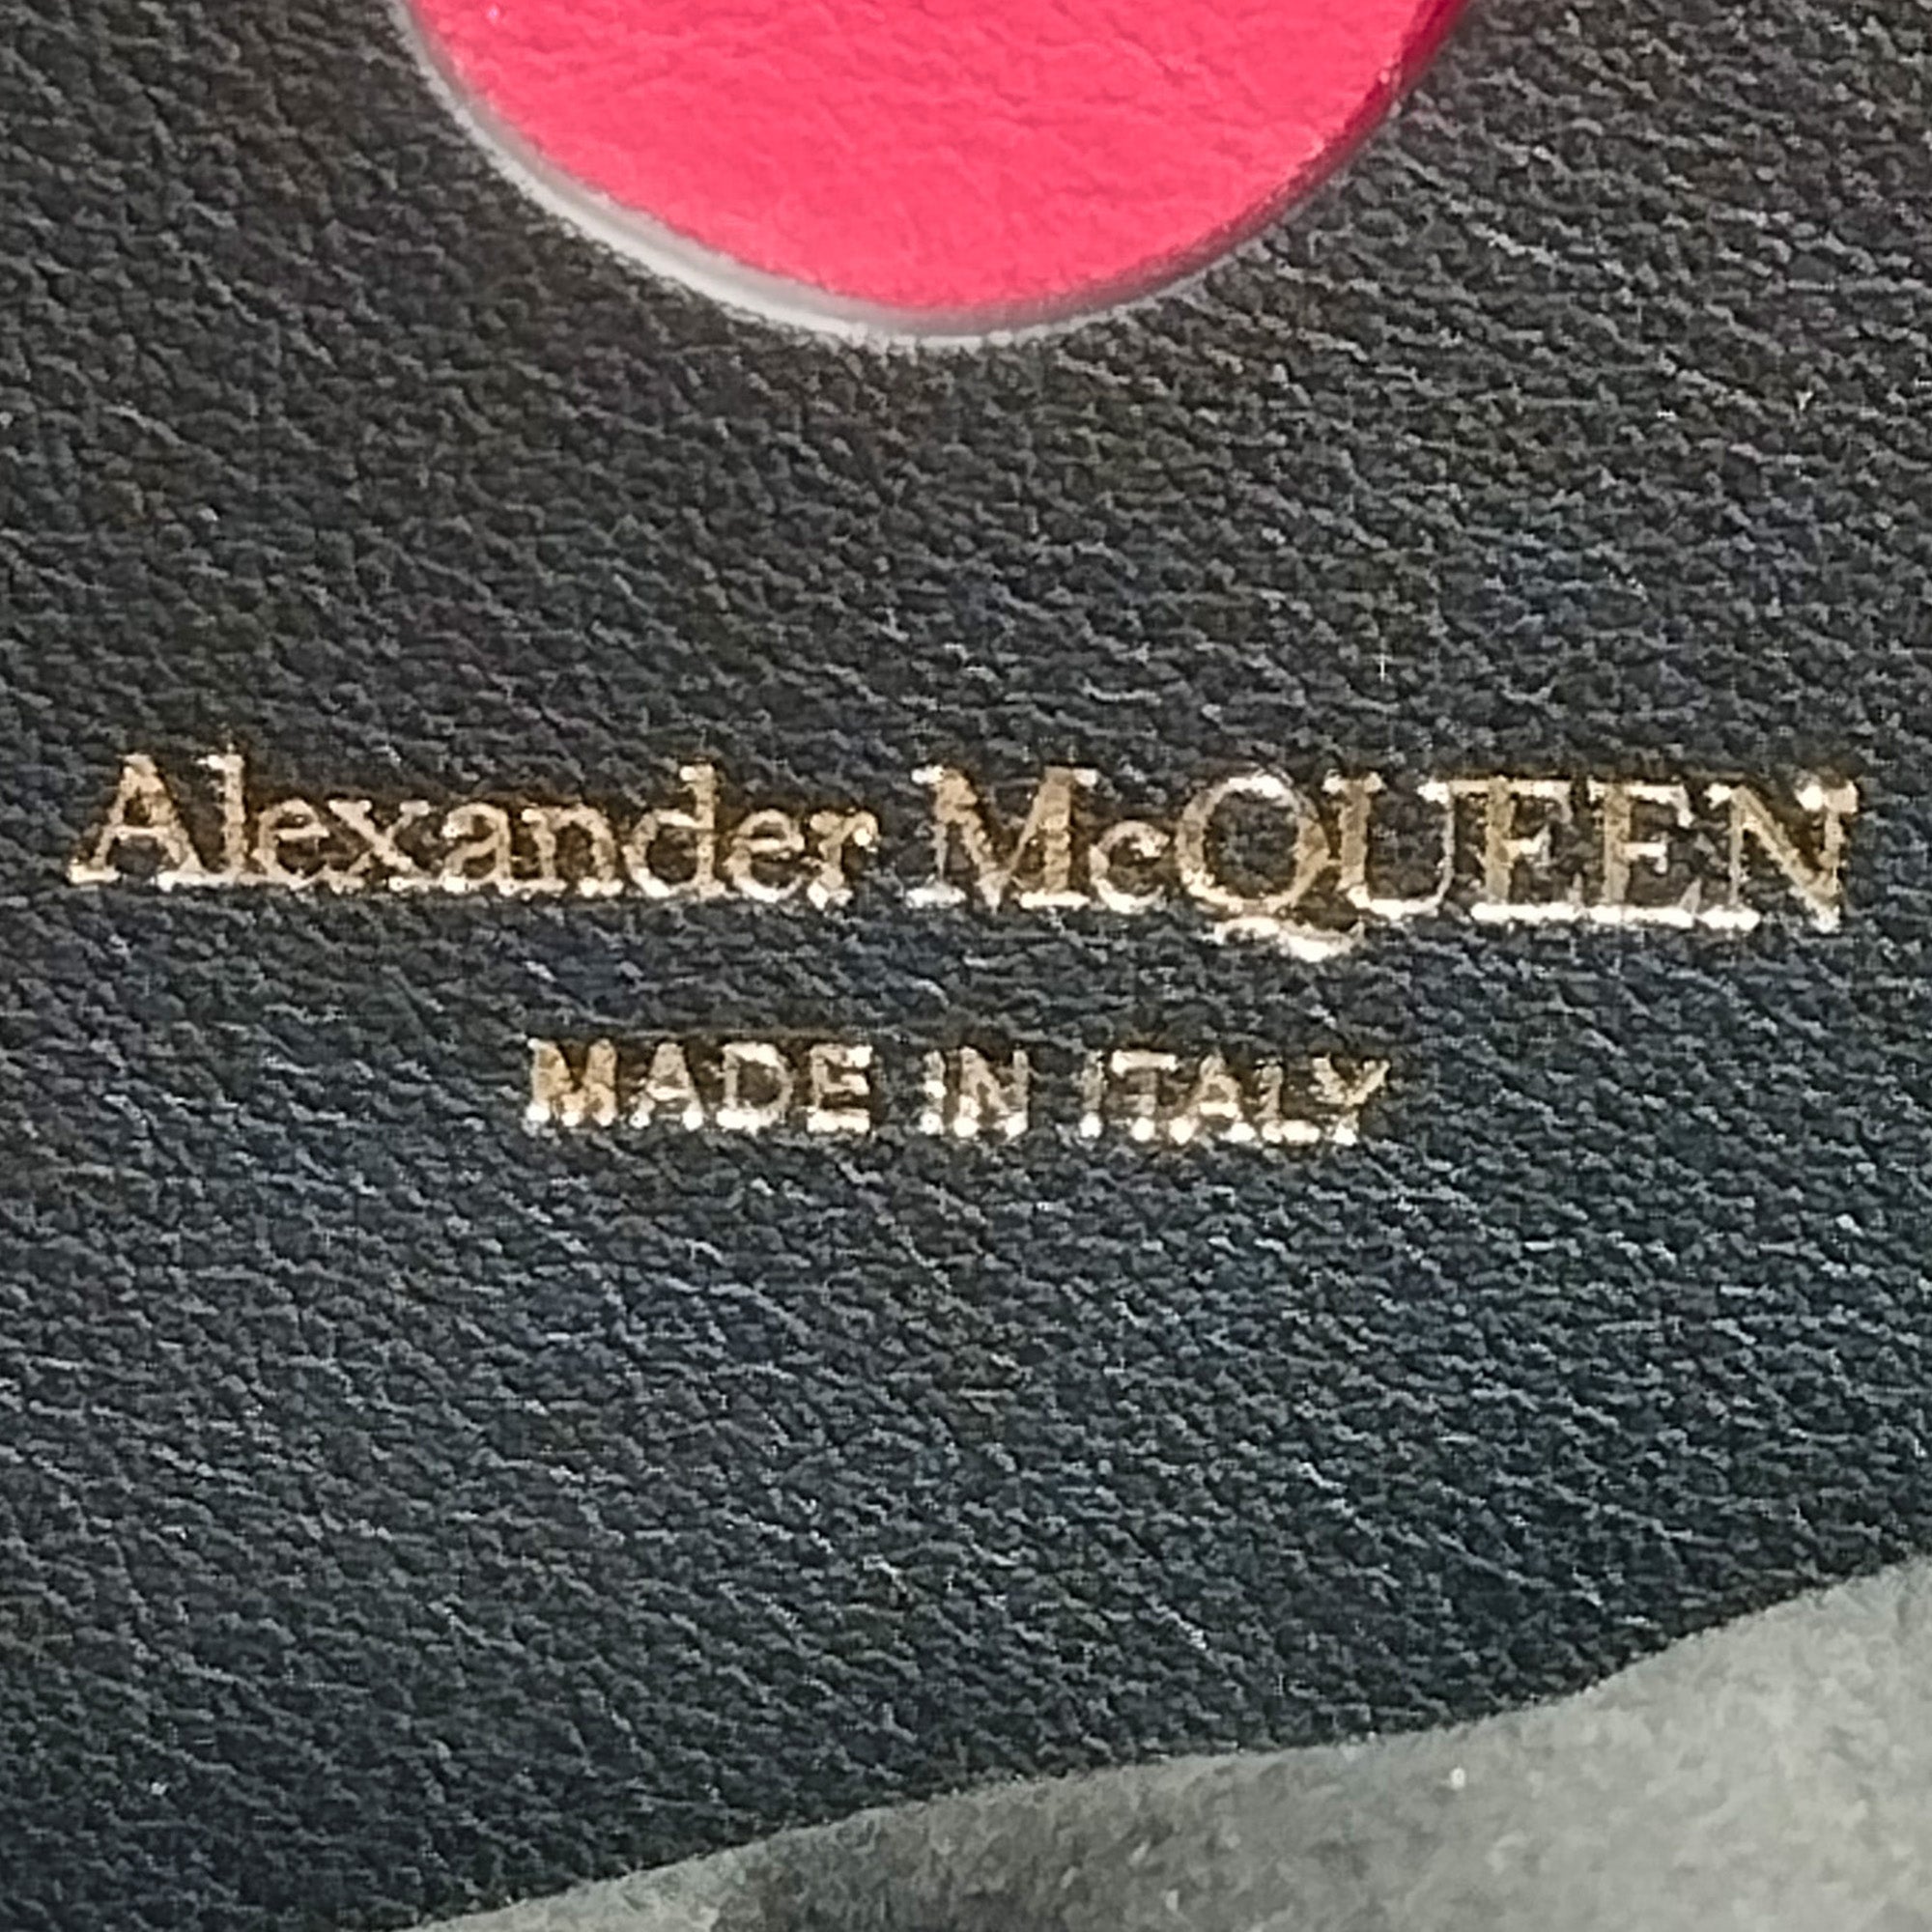 Alexander Mcqueen V&A Black Tote Bag - Limited Edition